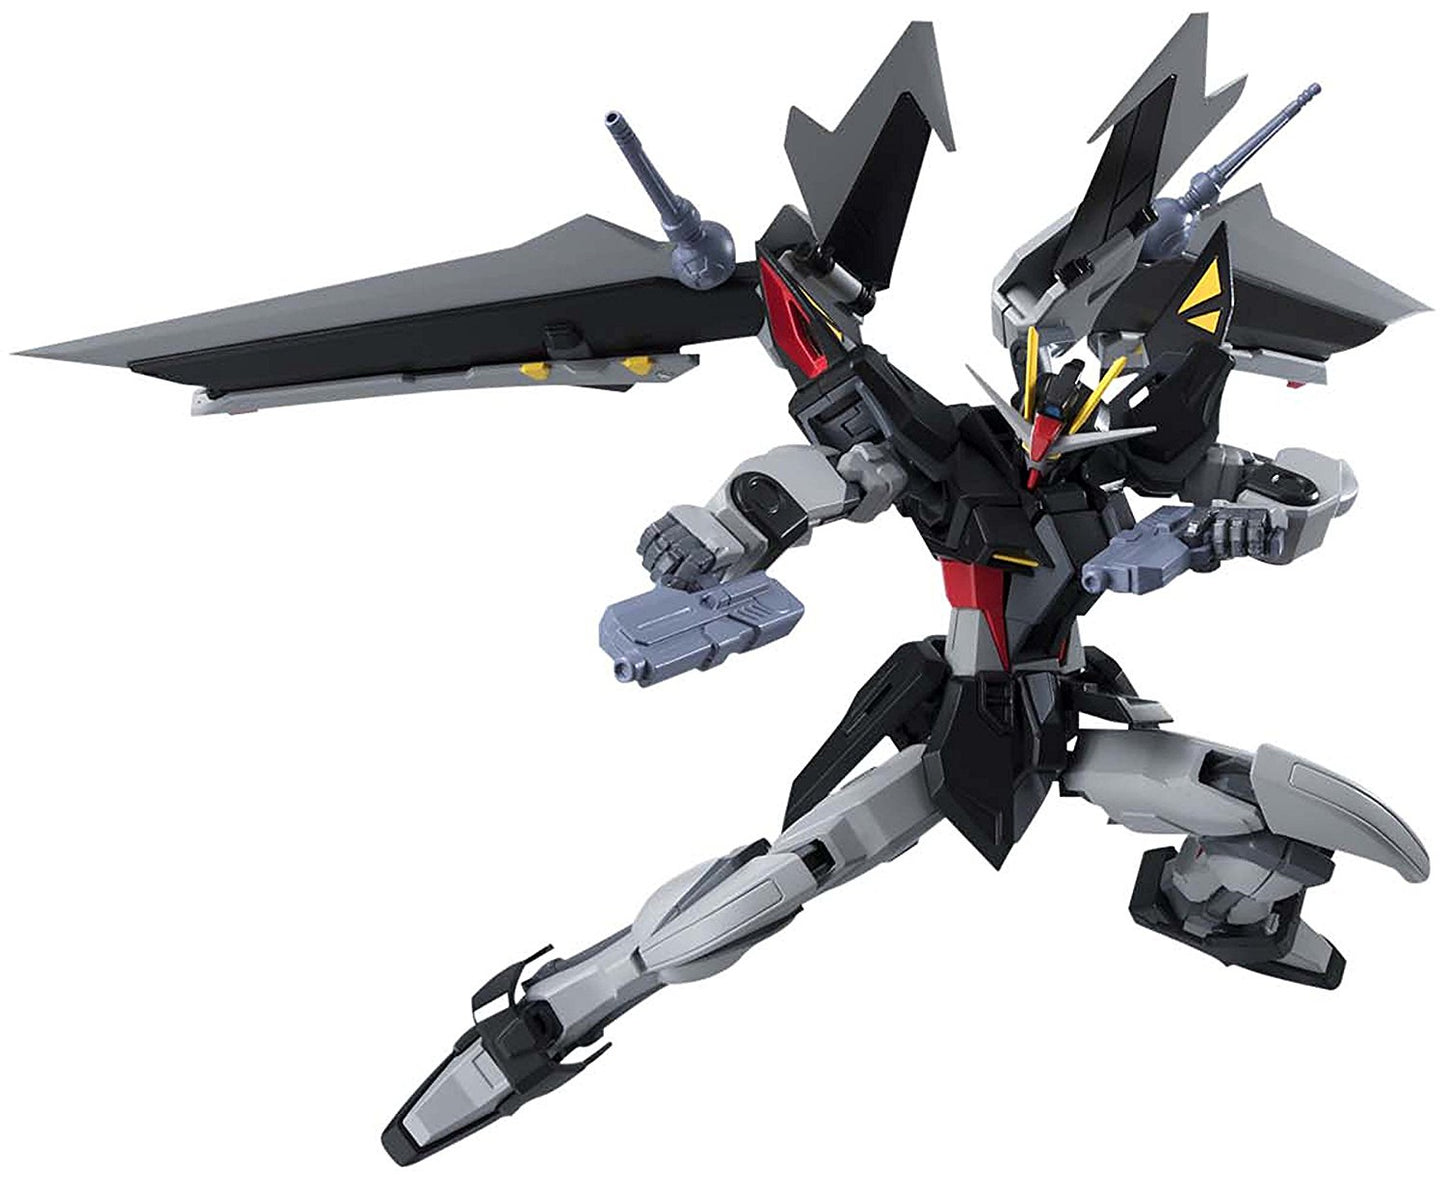 Gundam Seed C.E. 73: Stargazer Strike Noir Robot Spirits Action Figure